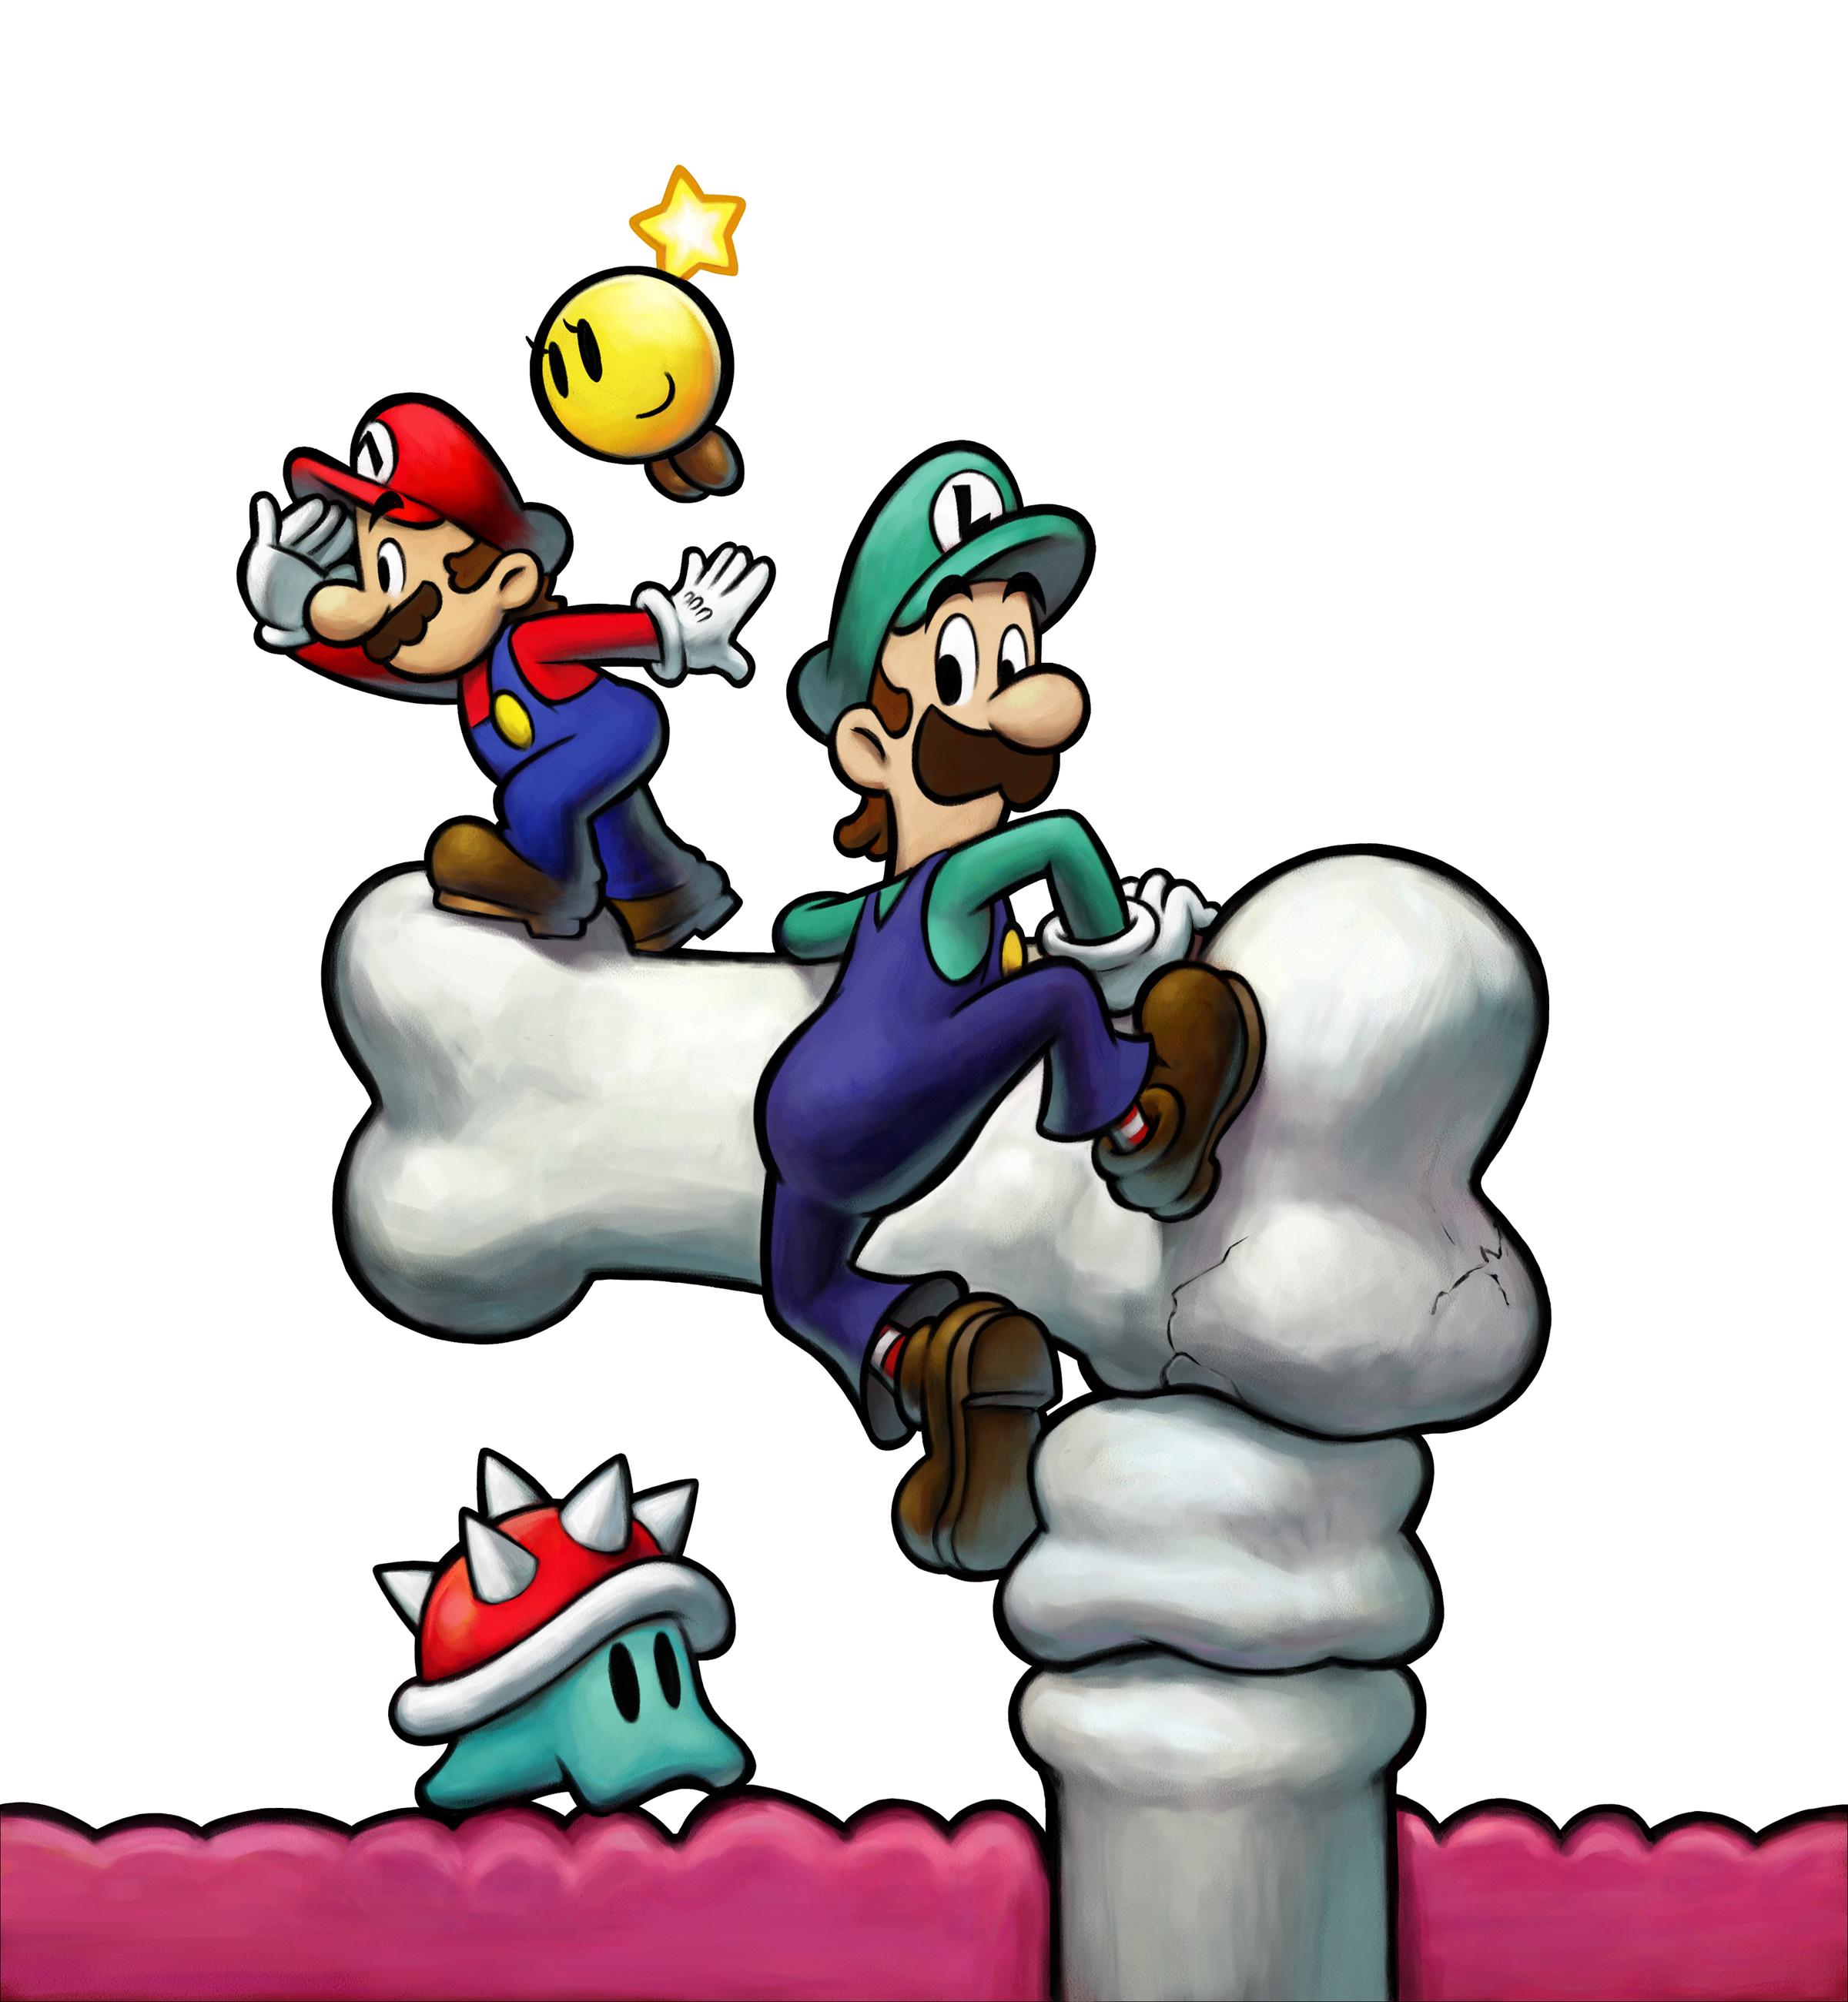 Mario And Luigi Bowsers Inside Story Enemies